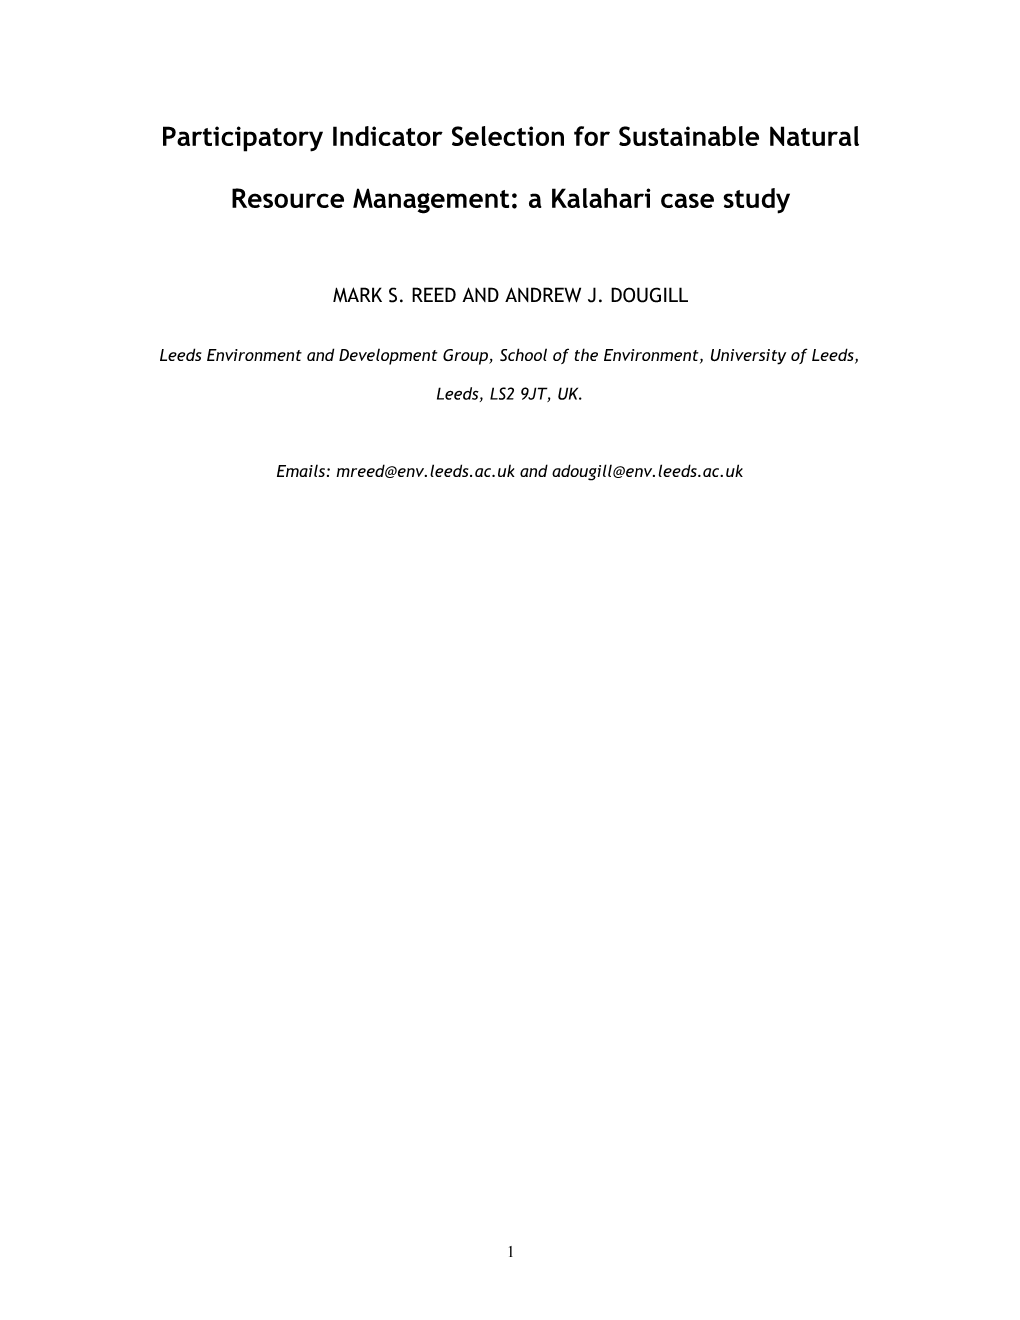 Facilitating Participation in Monitoring and Evaluation: a Conceptual Framework and Kalahari